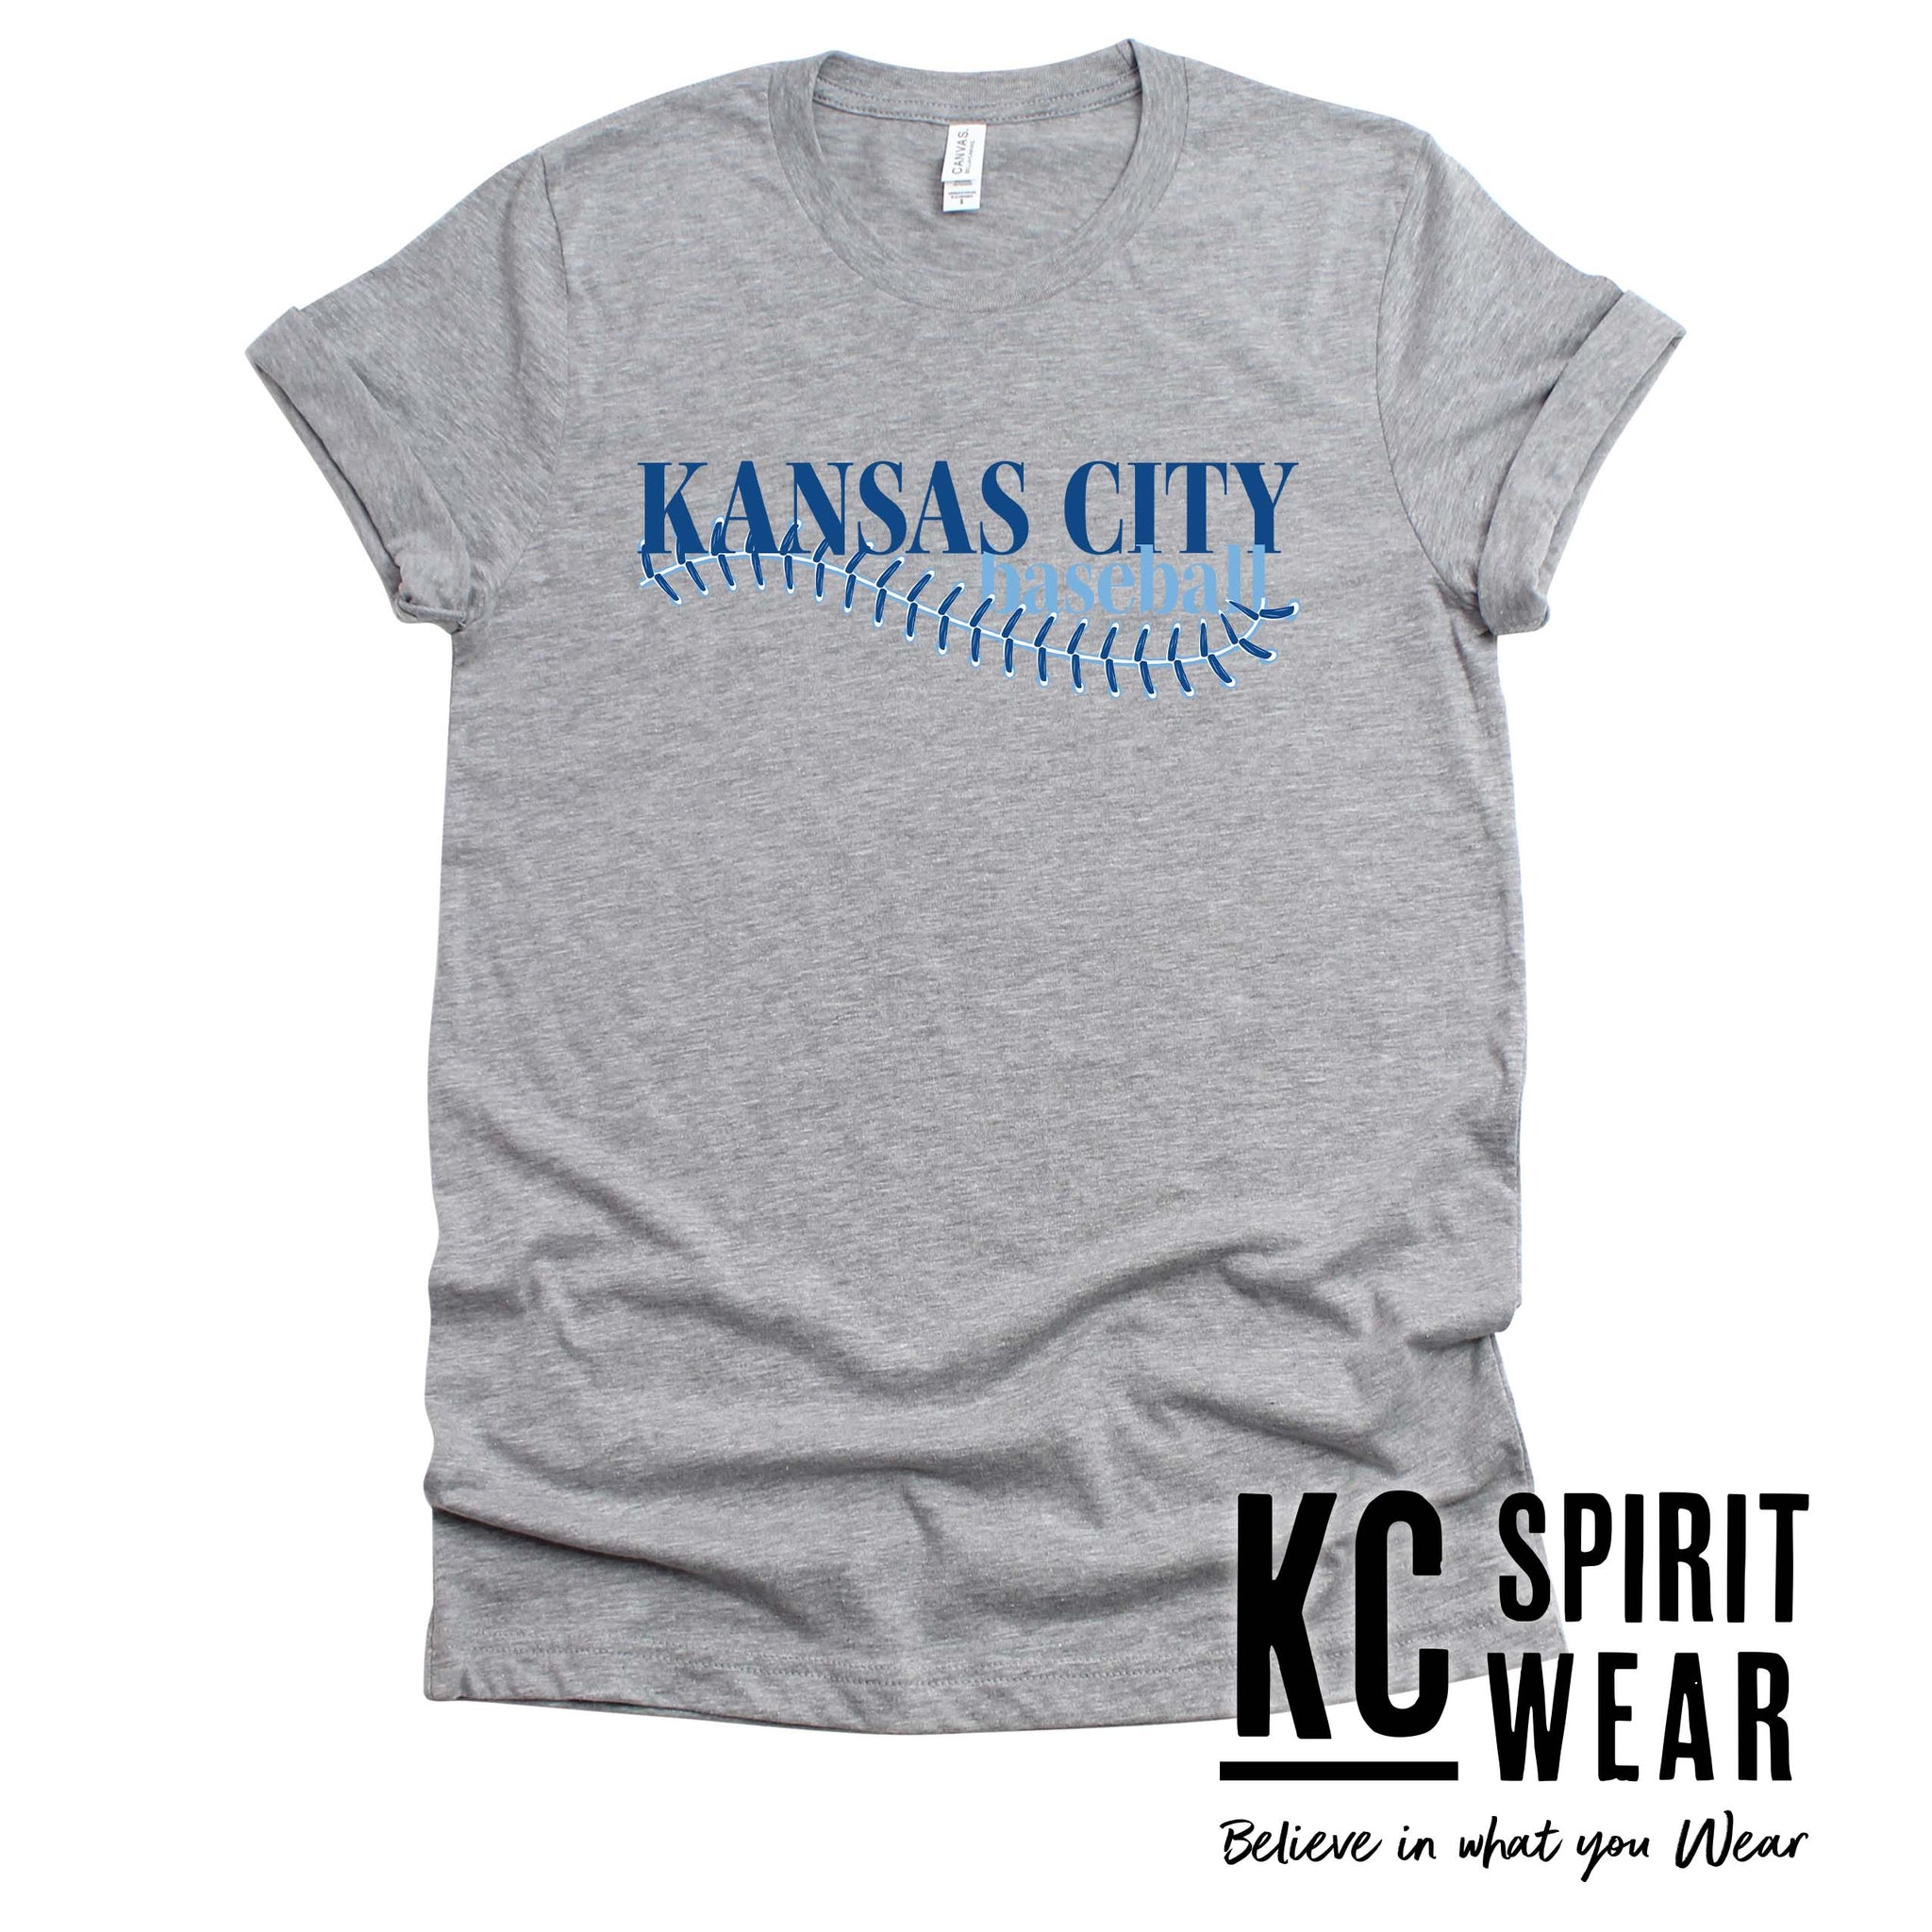 Kansas City Baseball